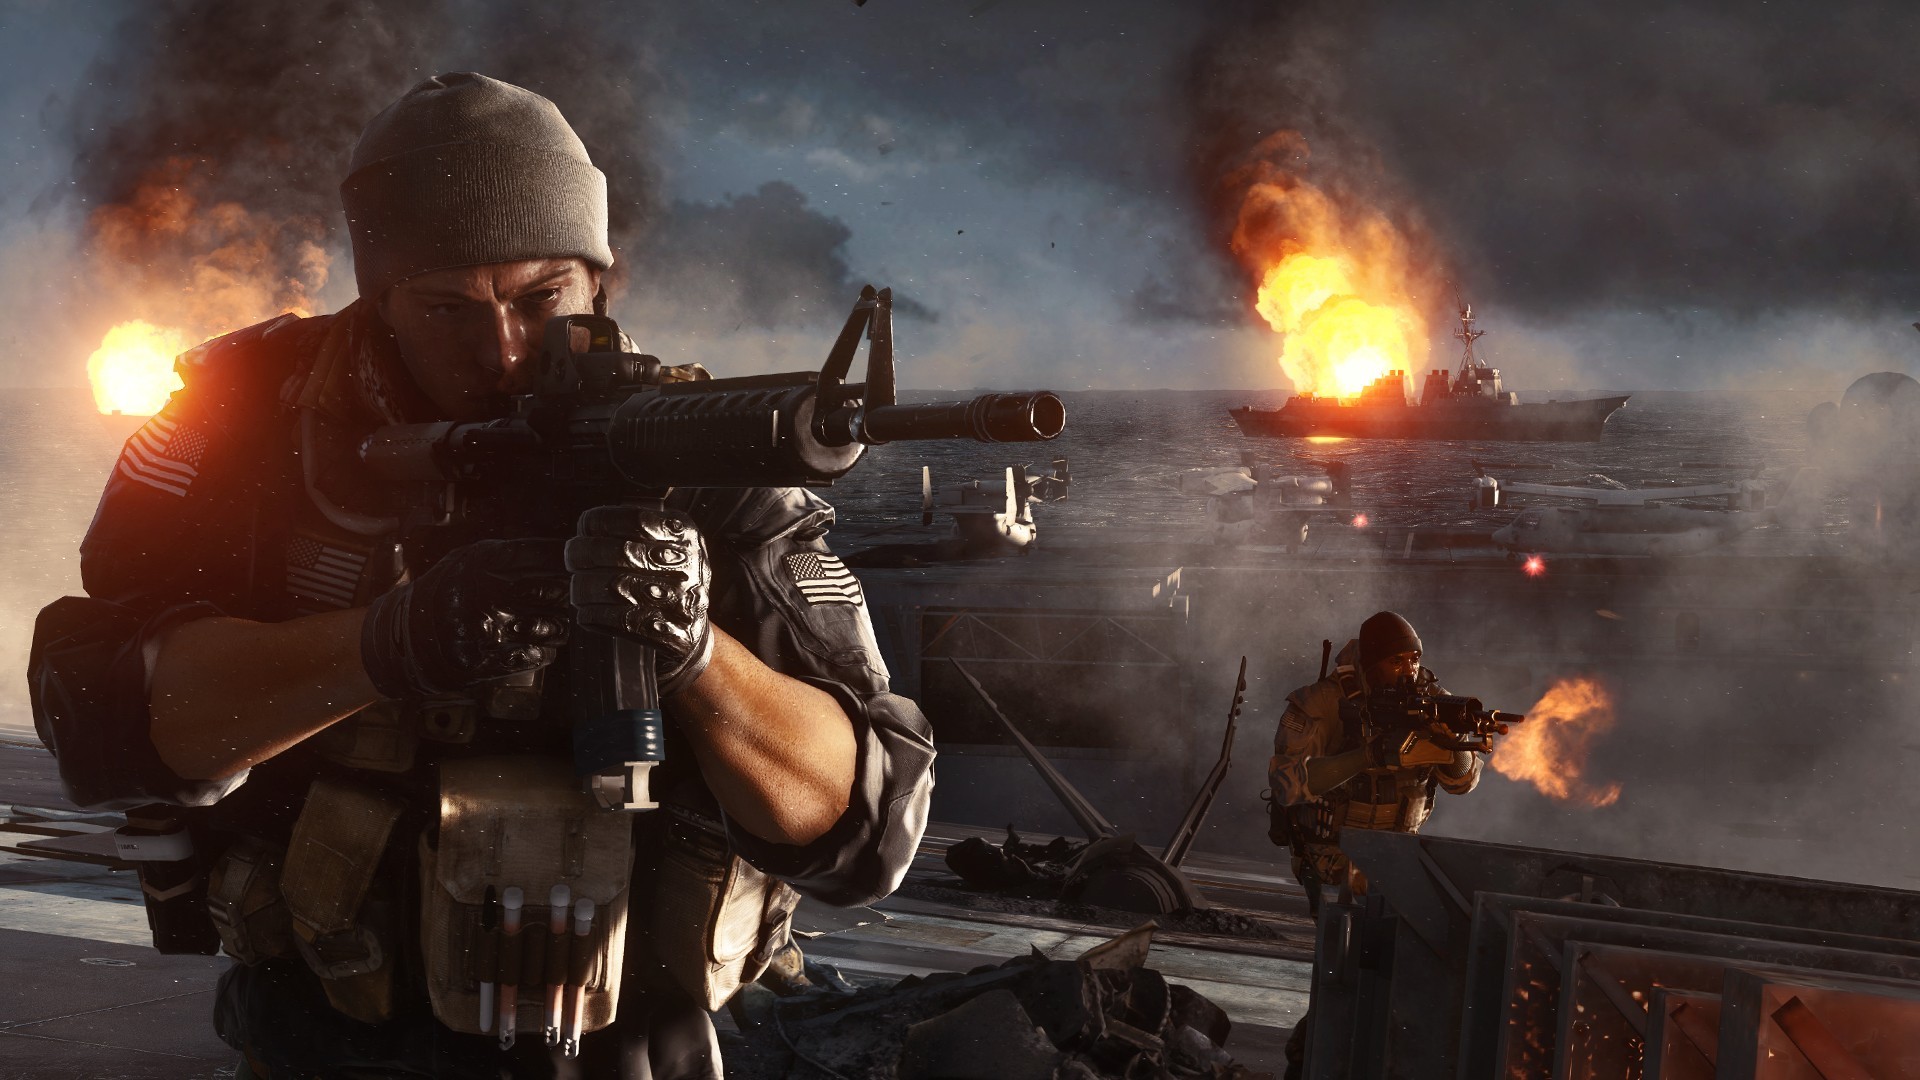  Battlefield 4 Premium Edition EA App - Origin PC